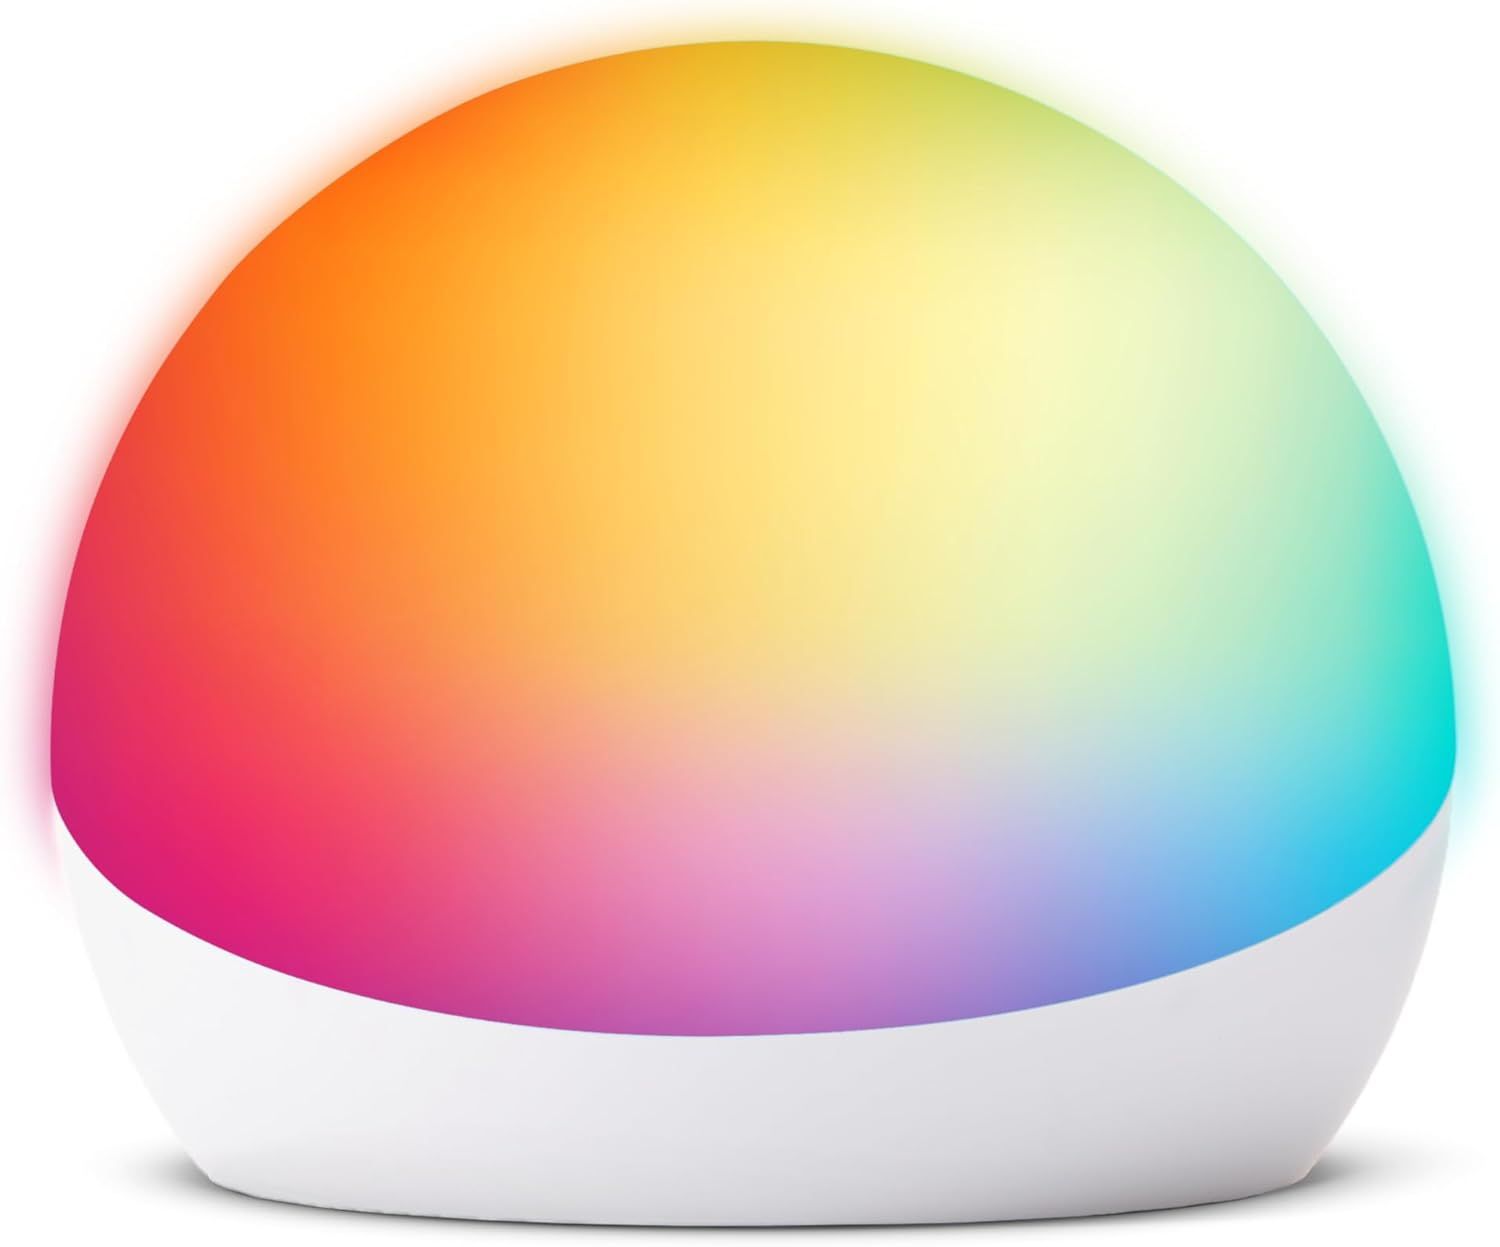 Echo Glow - Multicolor smart lamp | Works with Alexa device | Amazon (US)